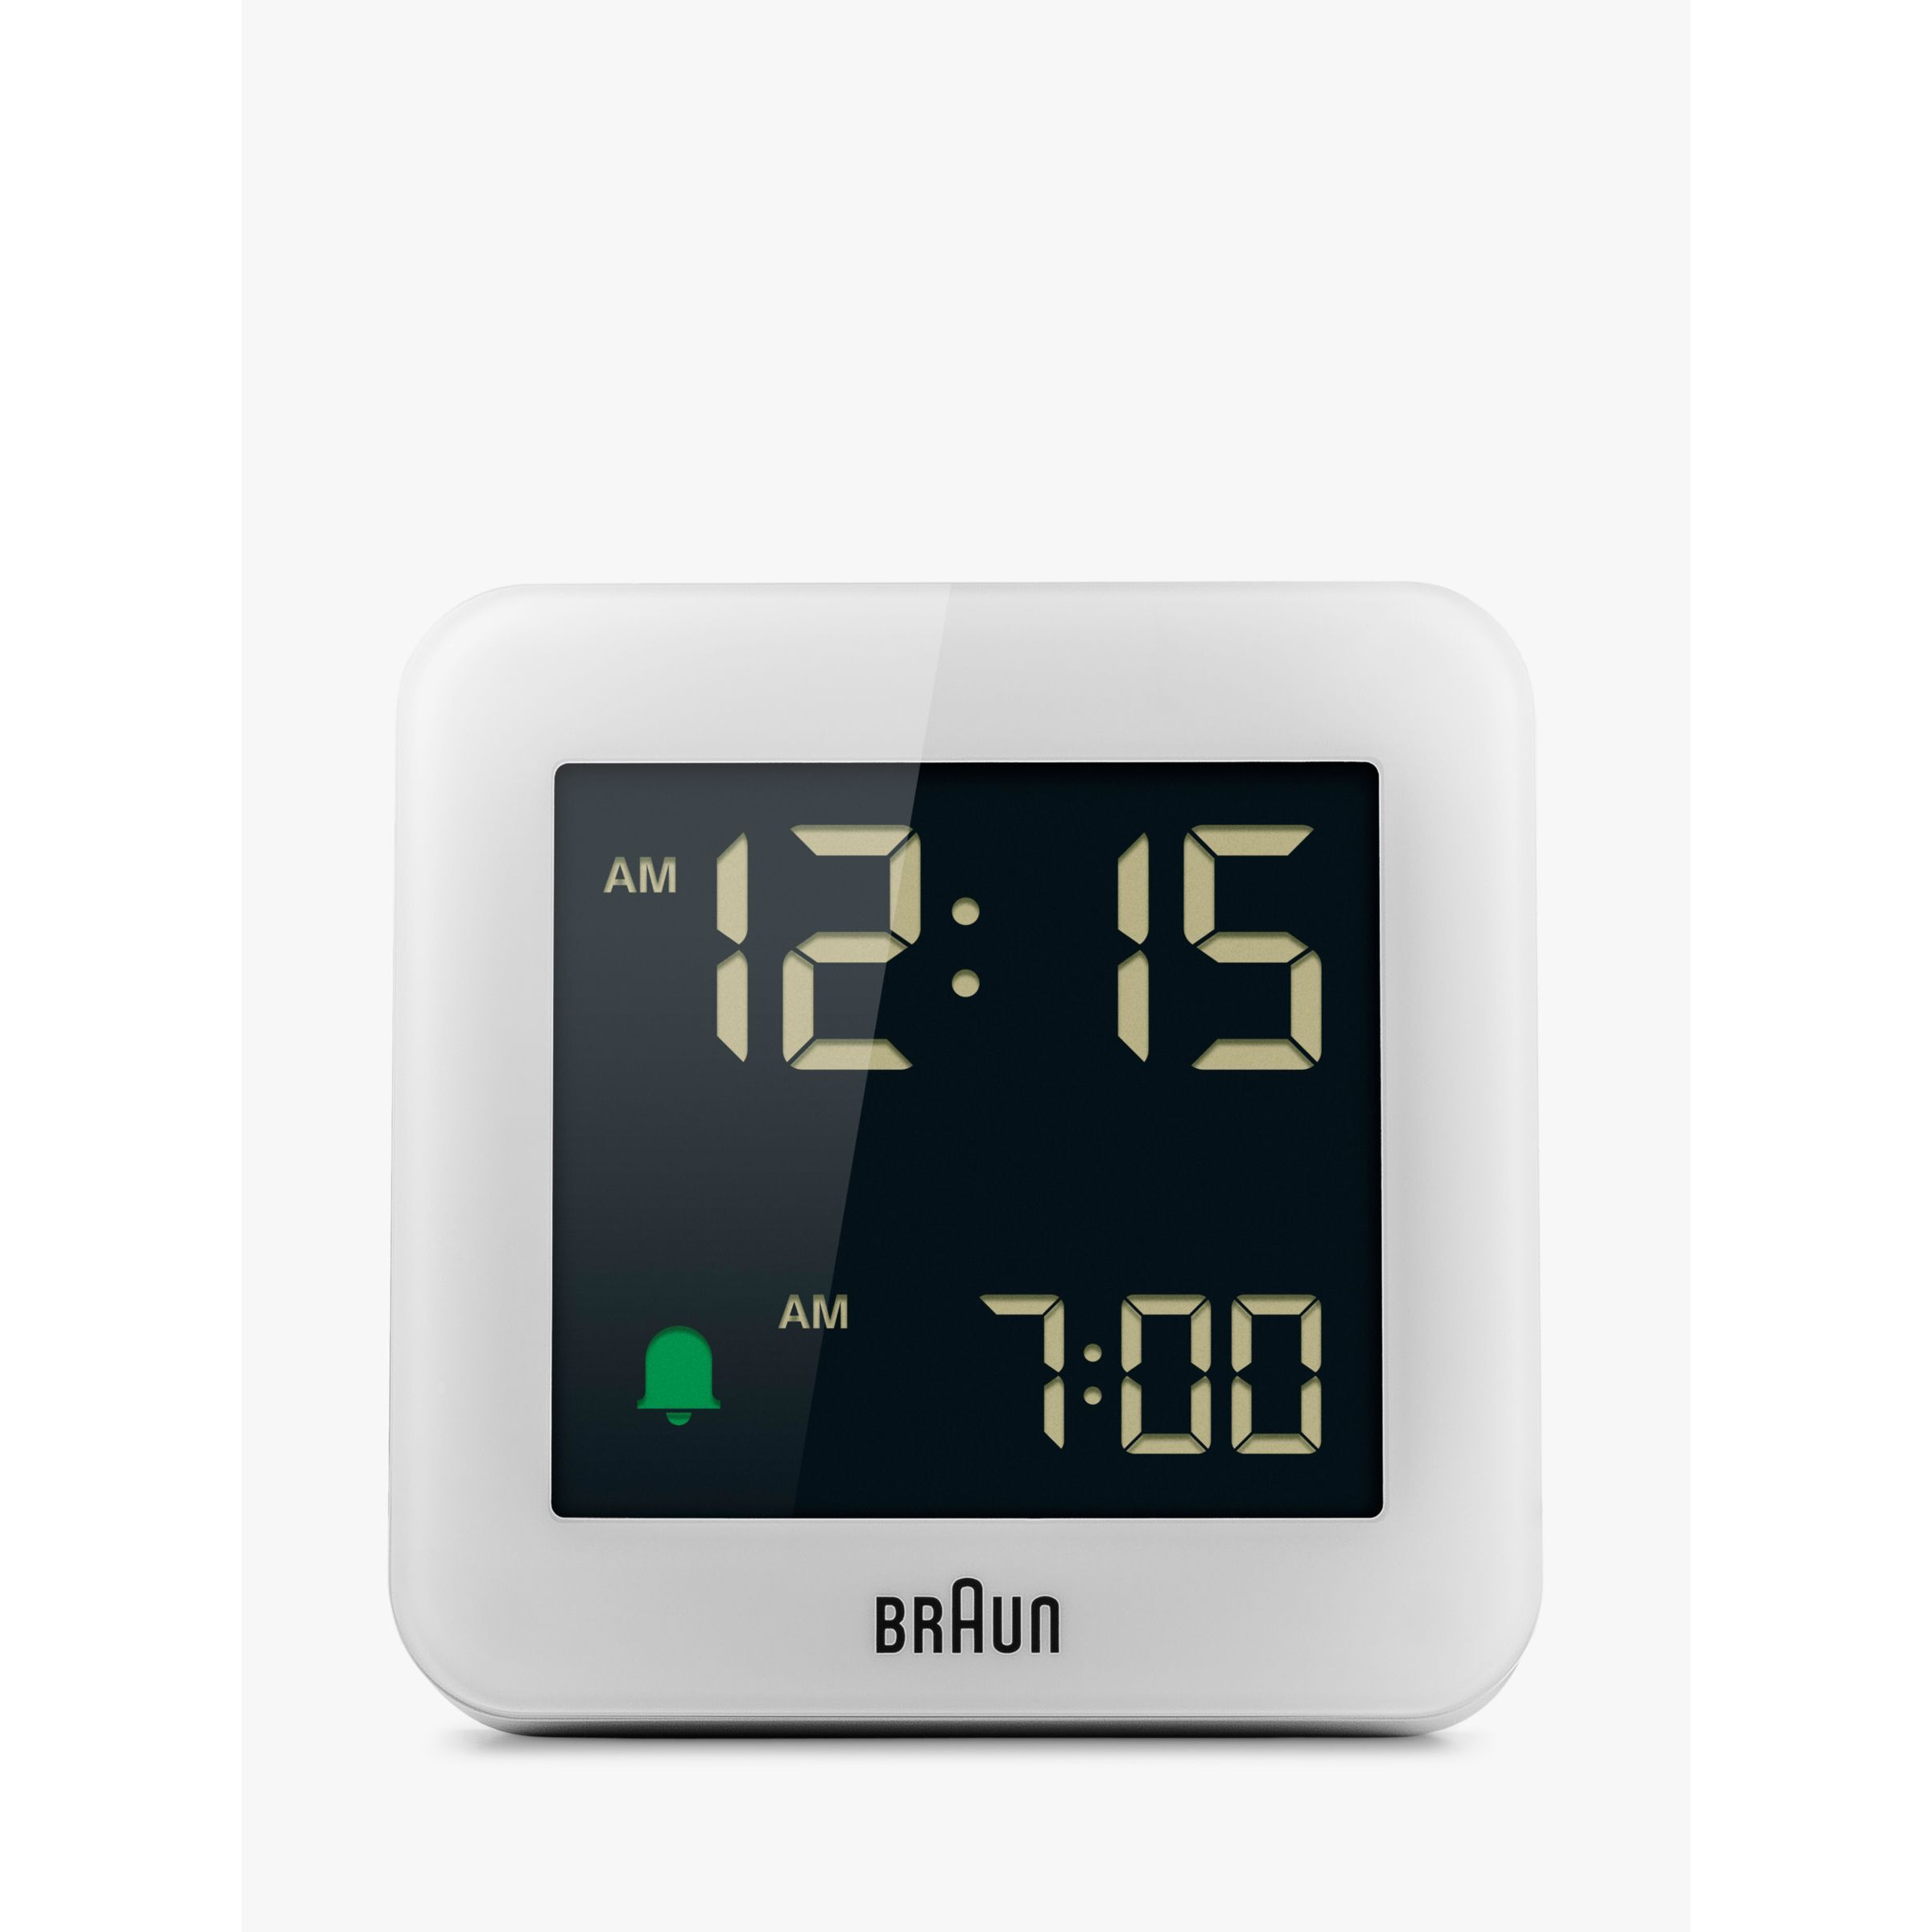 Braun Large Digital Alarm Clock - image 1